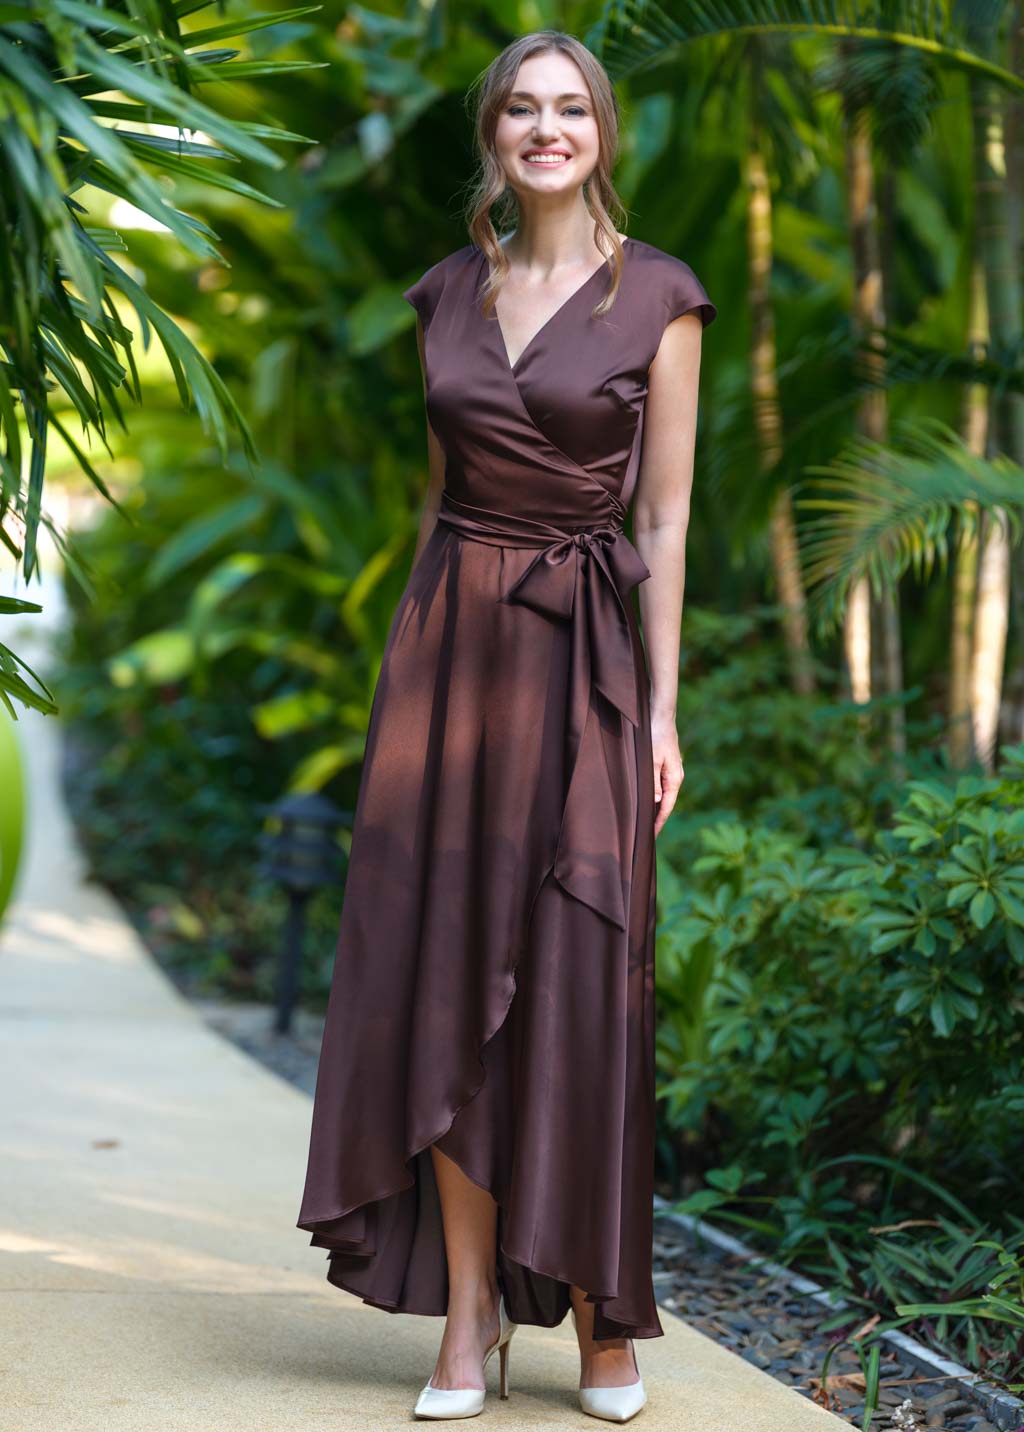 Chocolate brown romantic wrap dress